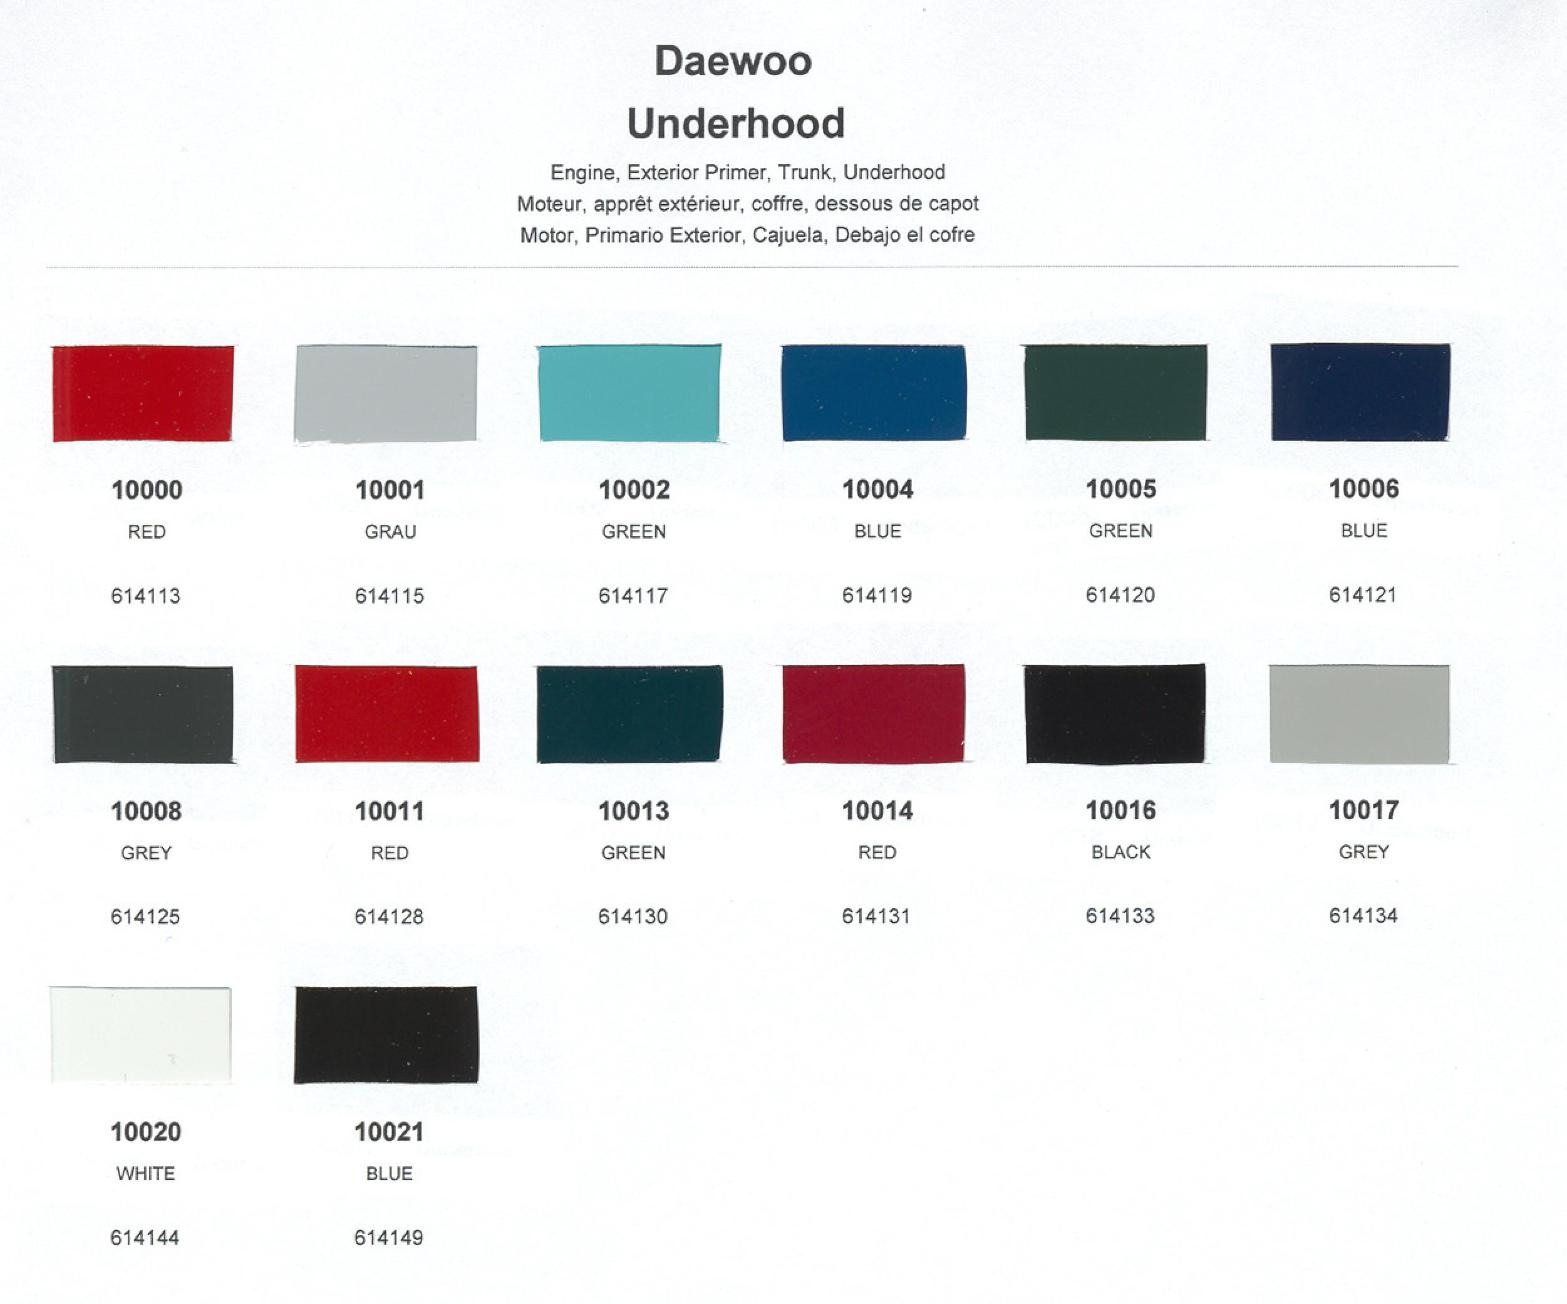 2001 Basf Daewoo Underhood Color Codes